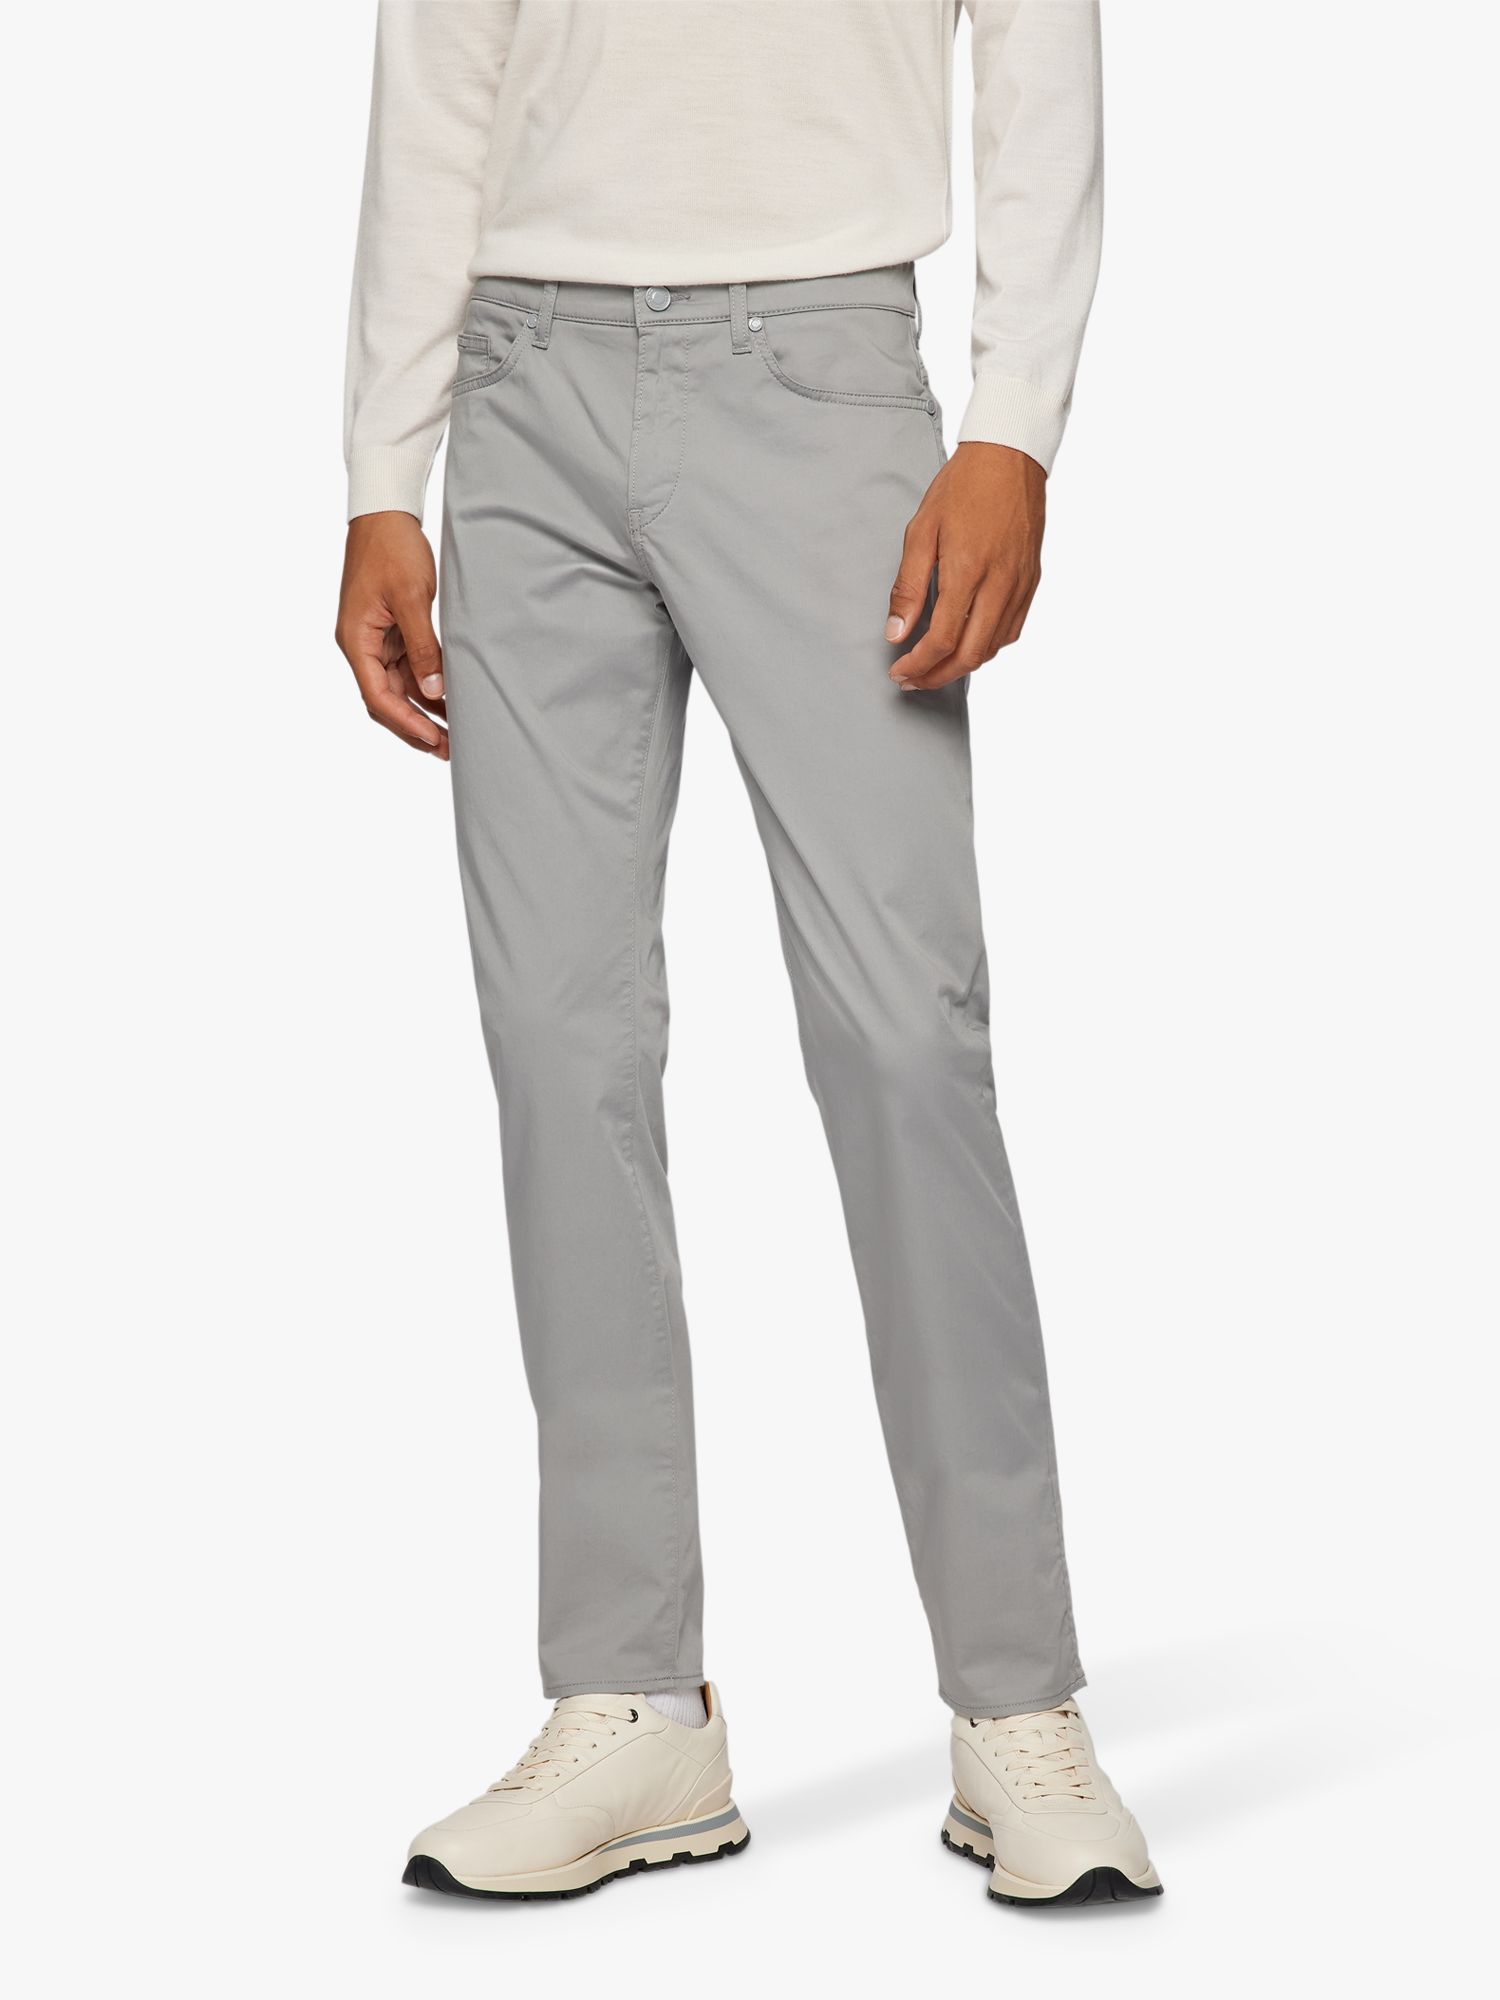 BOSS Delaware Slim Fit Trousers, Silver Grey at John Lewis & Partners